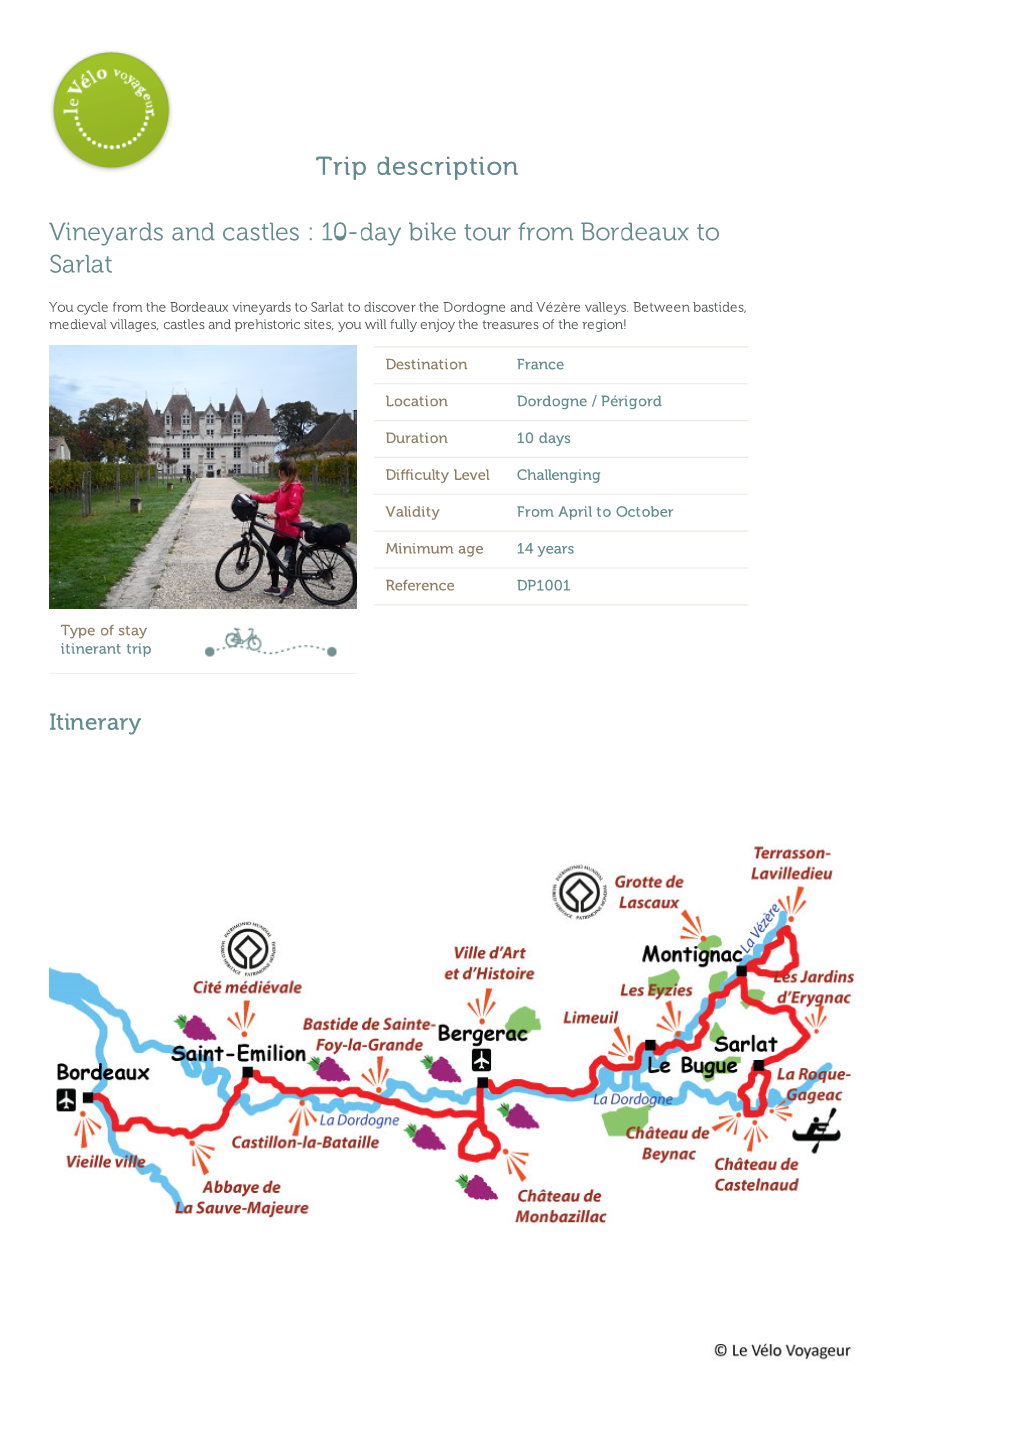 Trip Description Vineyards and Castles : 10-Day Bike Tour from Bordeaux To